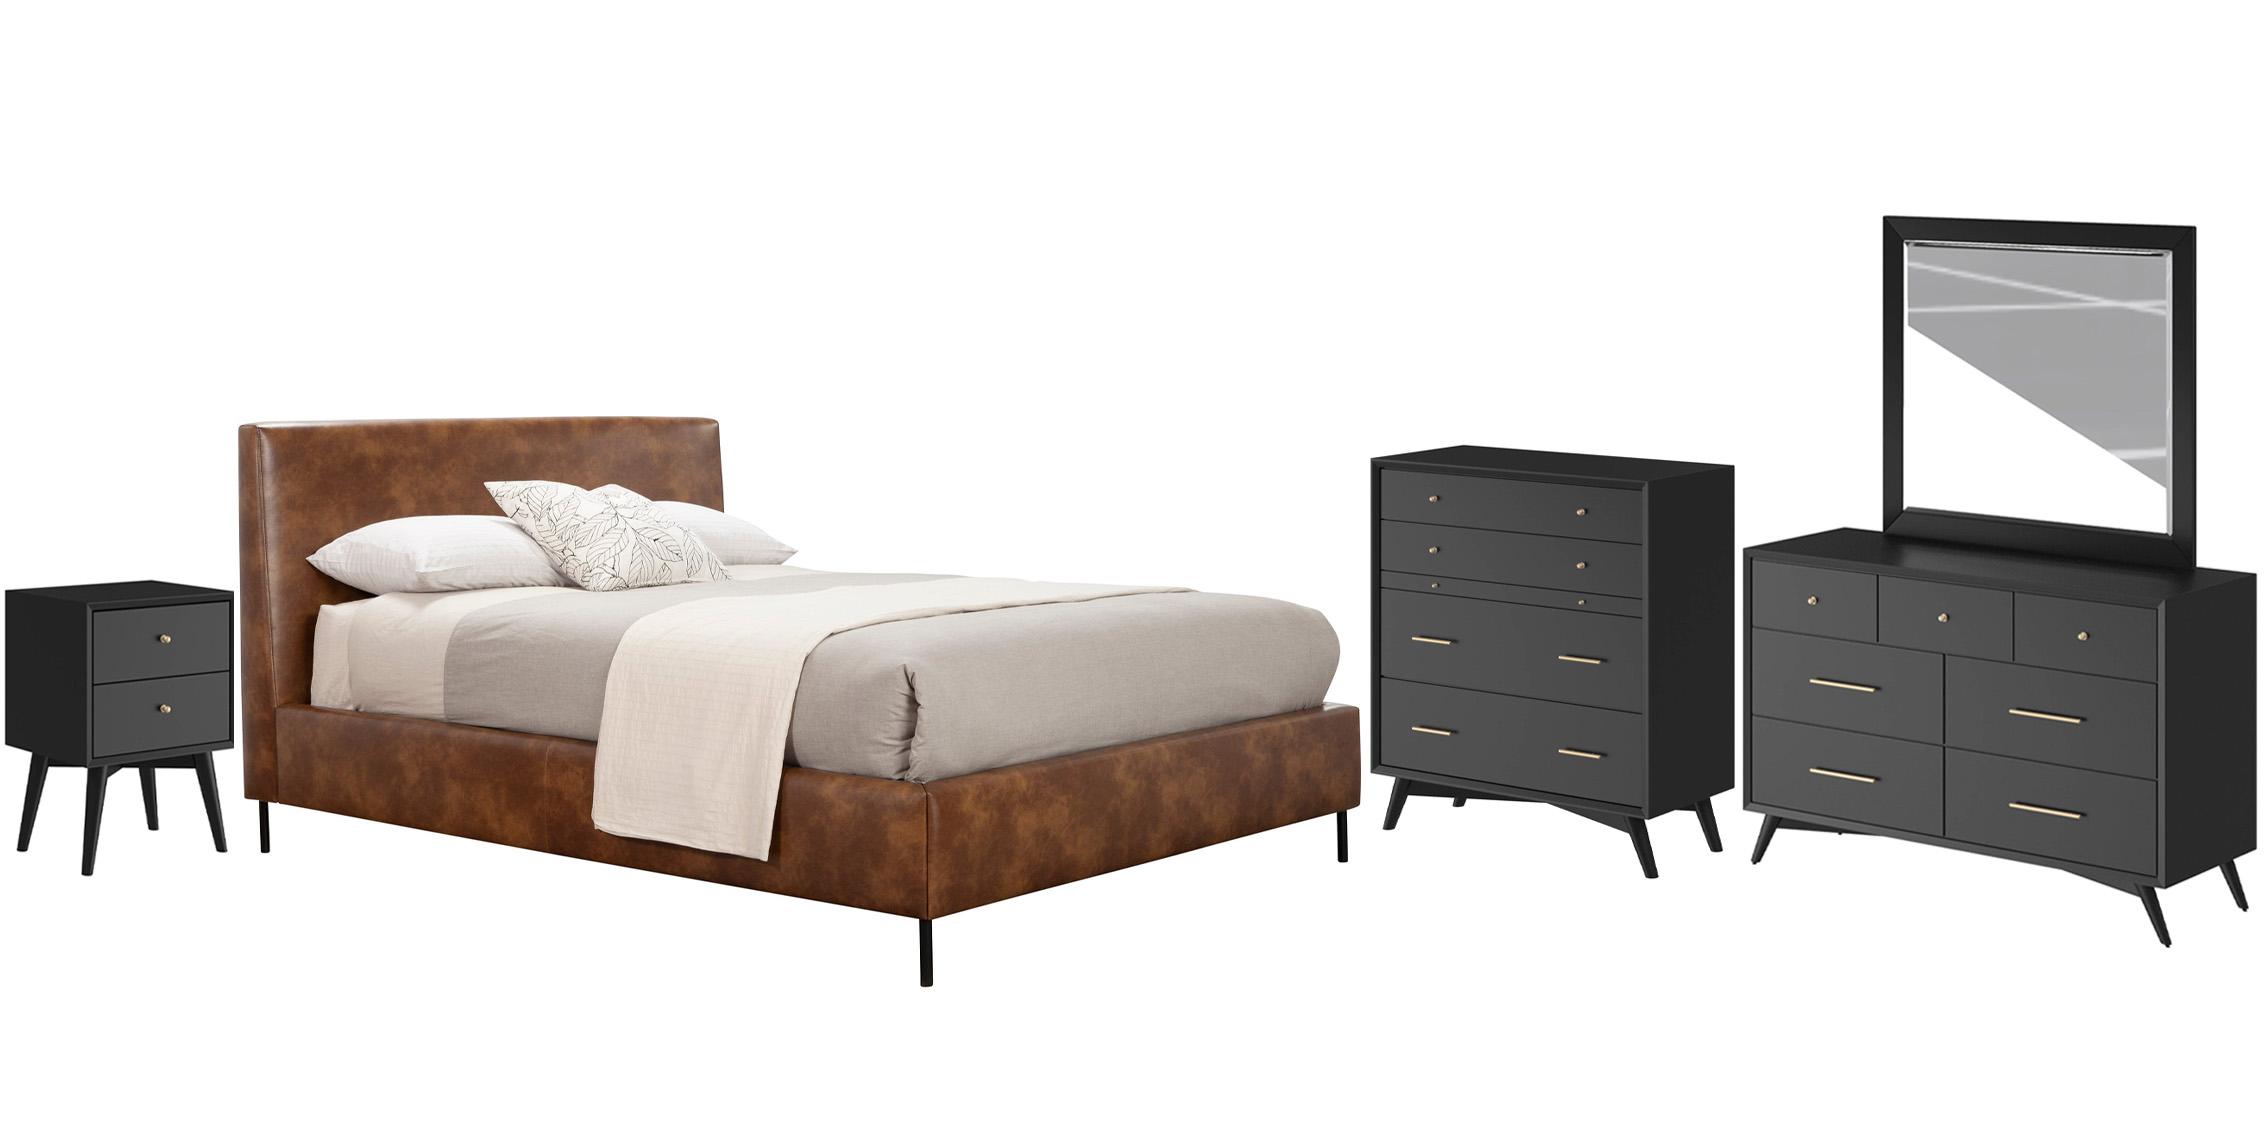 Modern, Rustic Platform Bedroom Set SOPHIA/FLYNN 6902CK-BRN-Set-5-BLK in Brown, Black Faux Leather